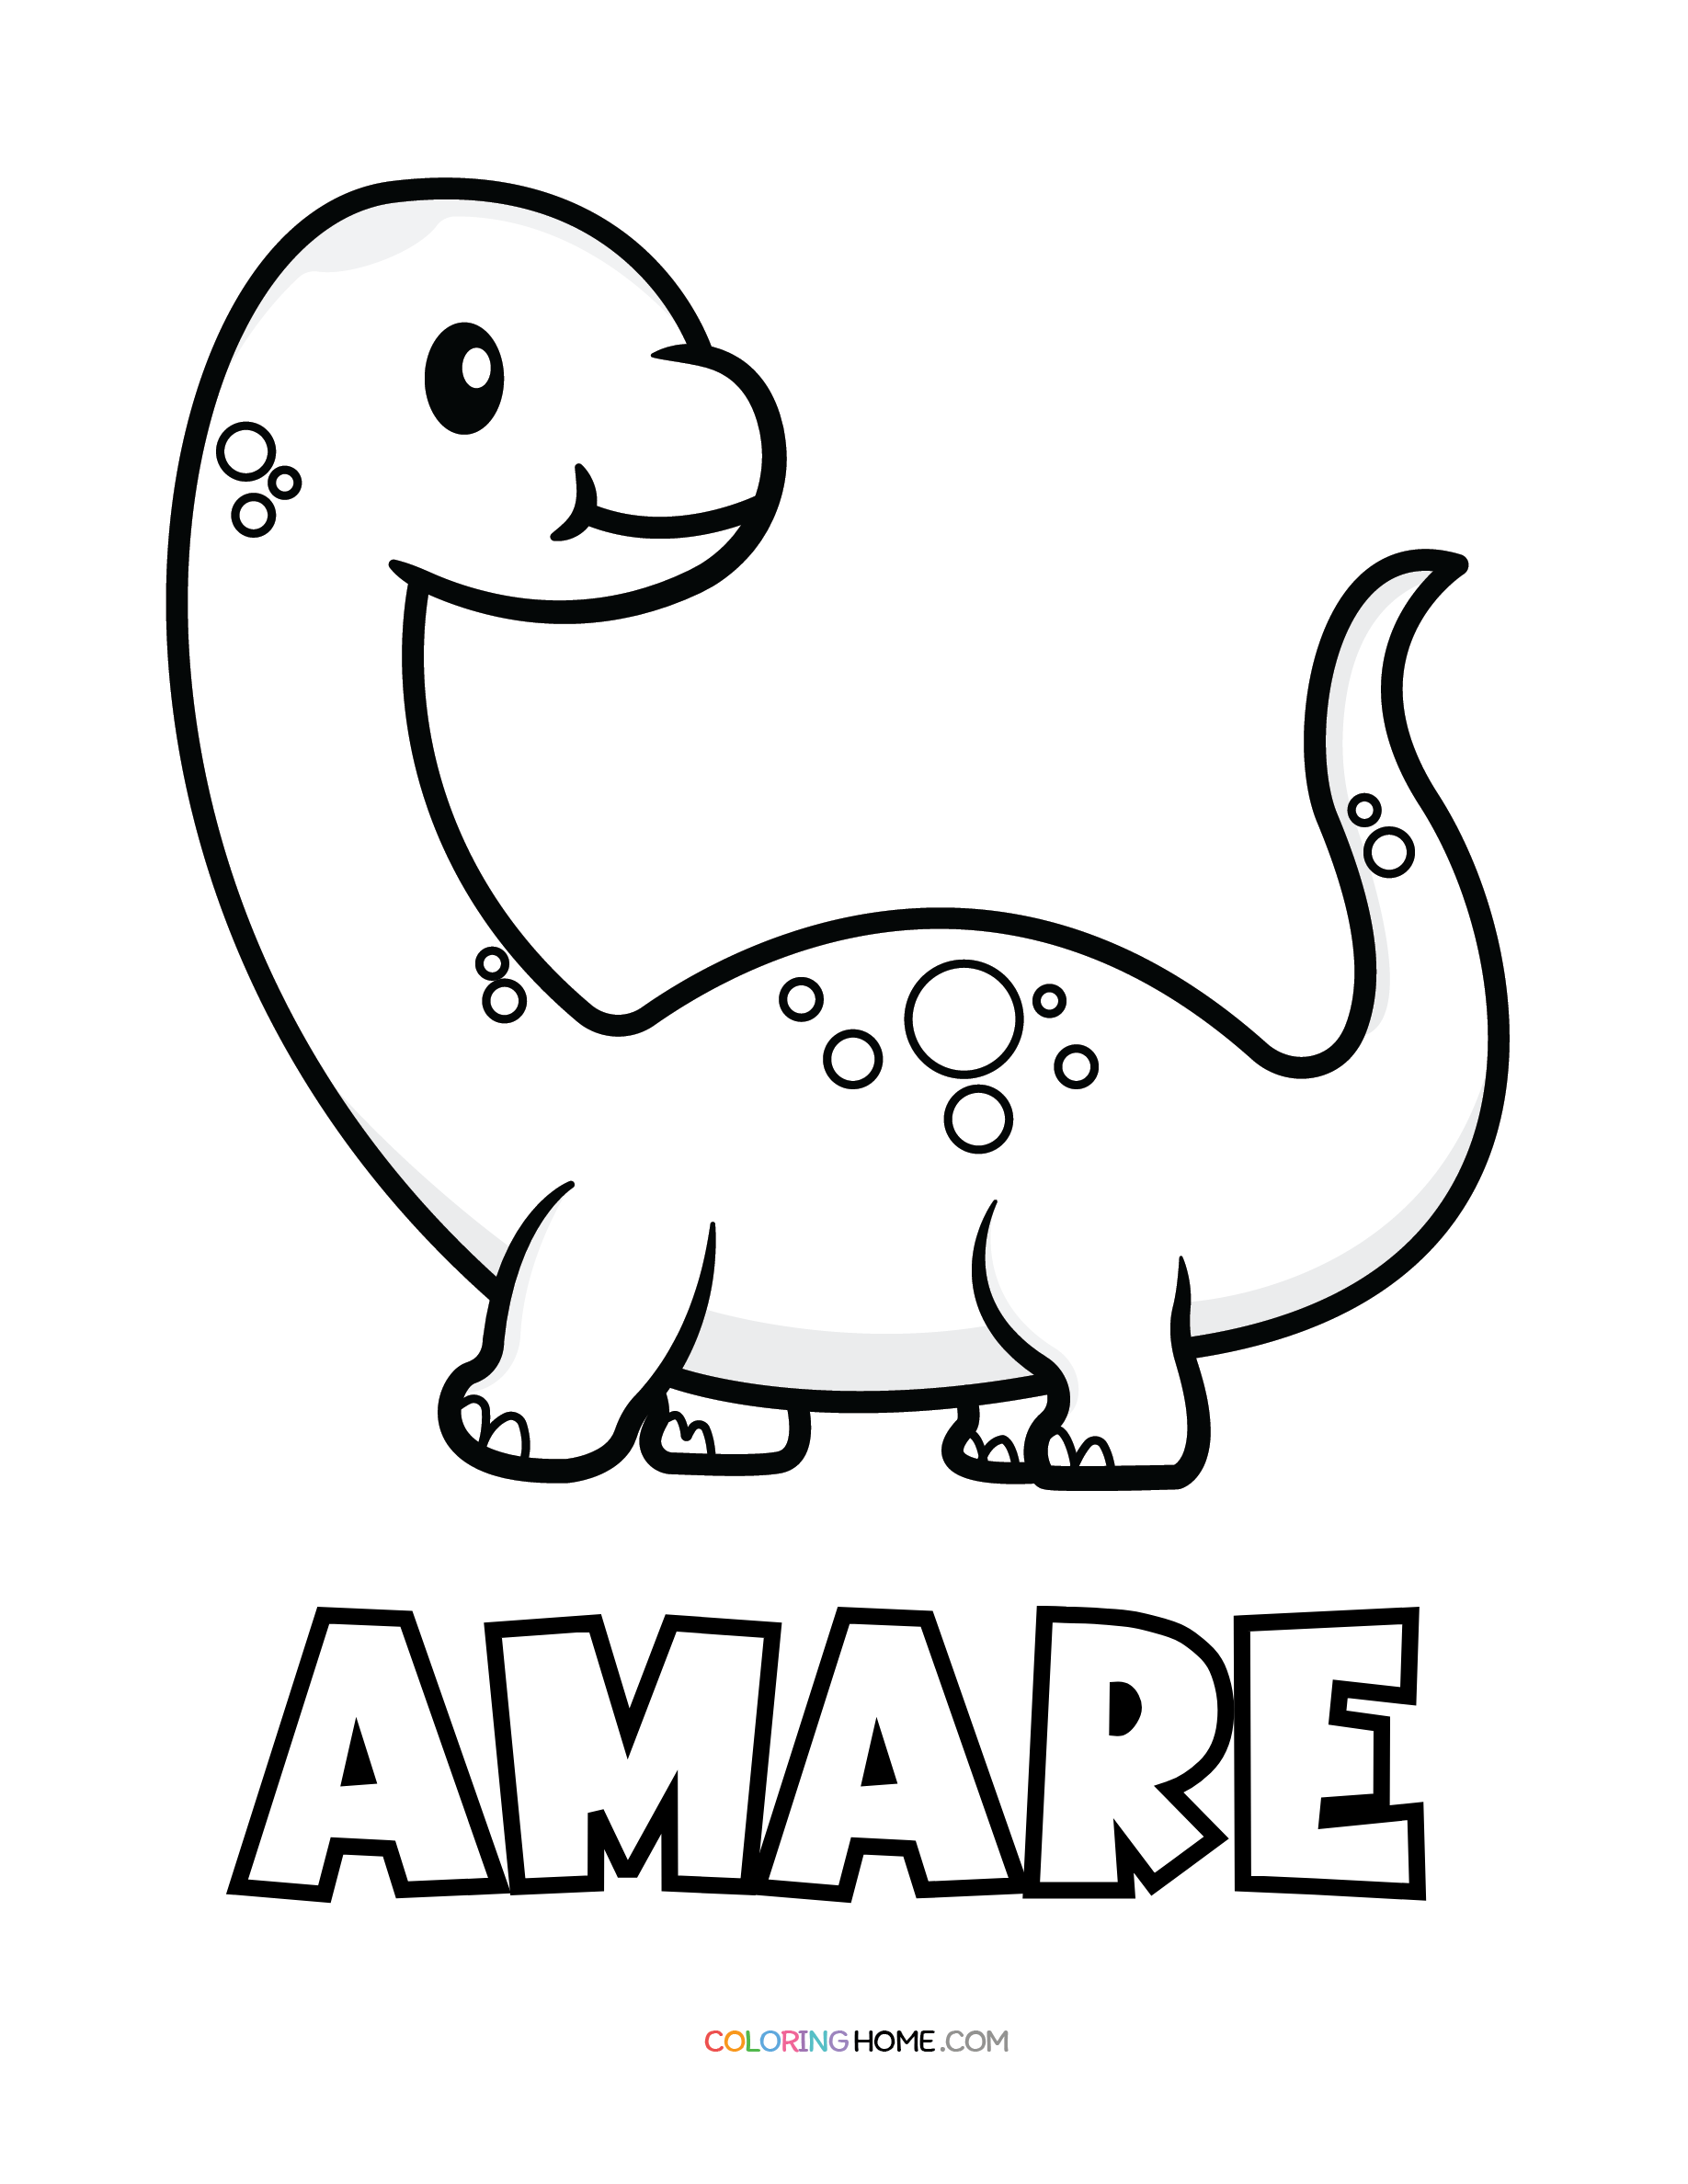 Amare dinosaur coloring page